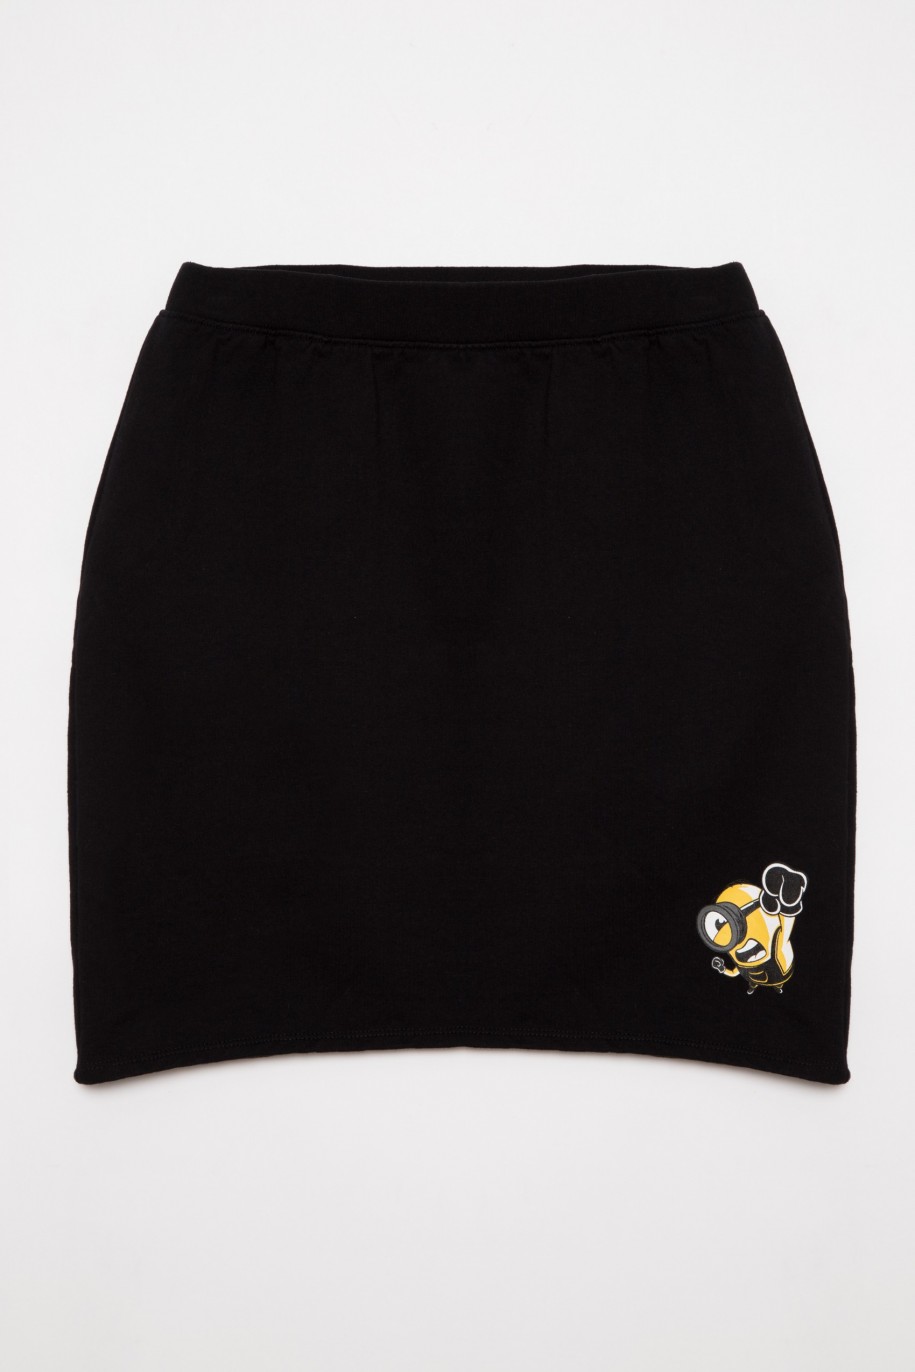 Czarna krótka spódnica Minionki - 28307